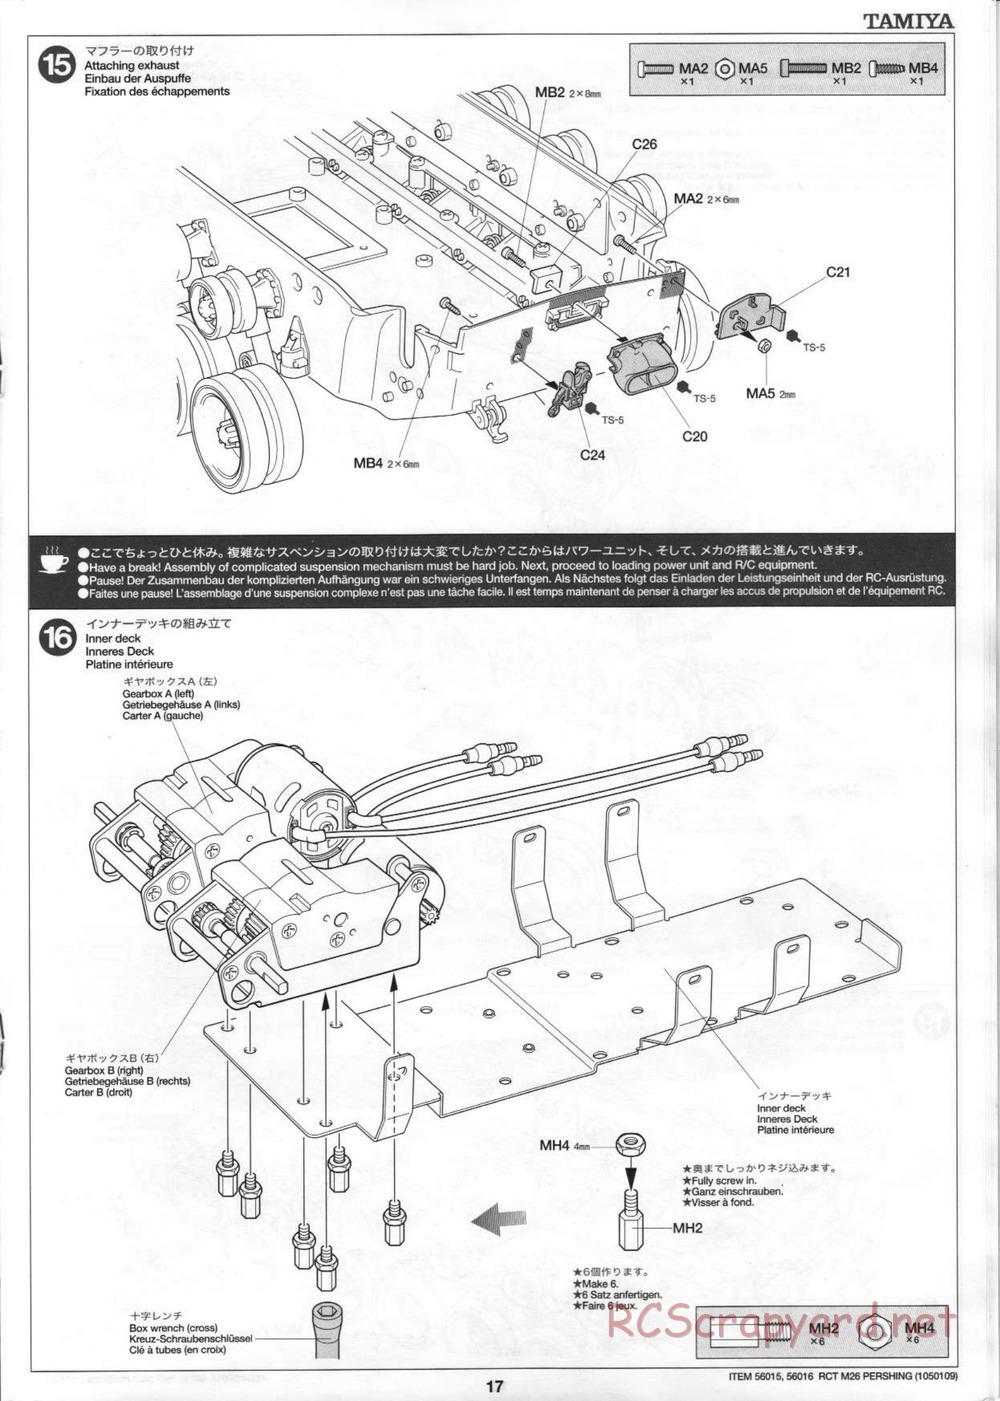 Tamiya - M26 Pershing - 1/16 Scale Chassis - Manual - Page 17